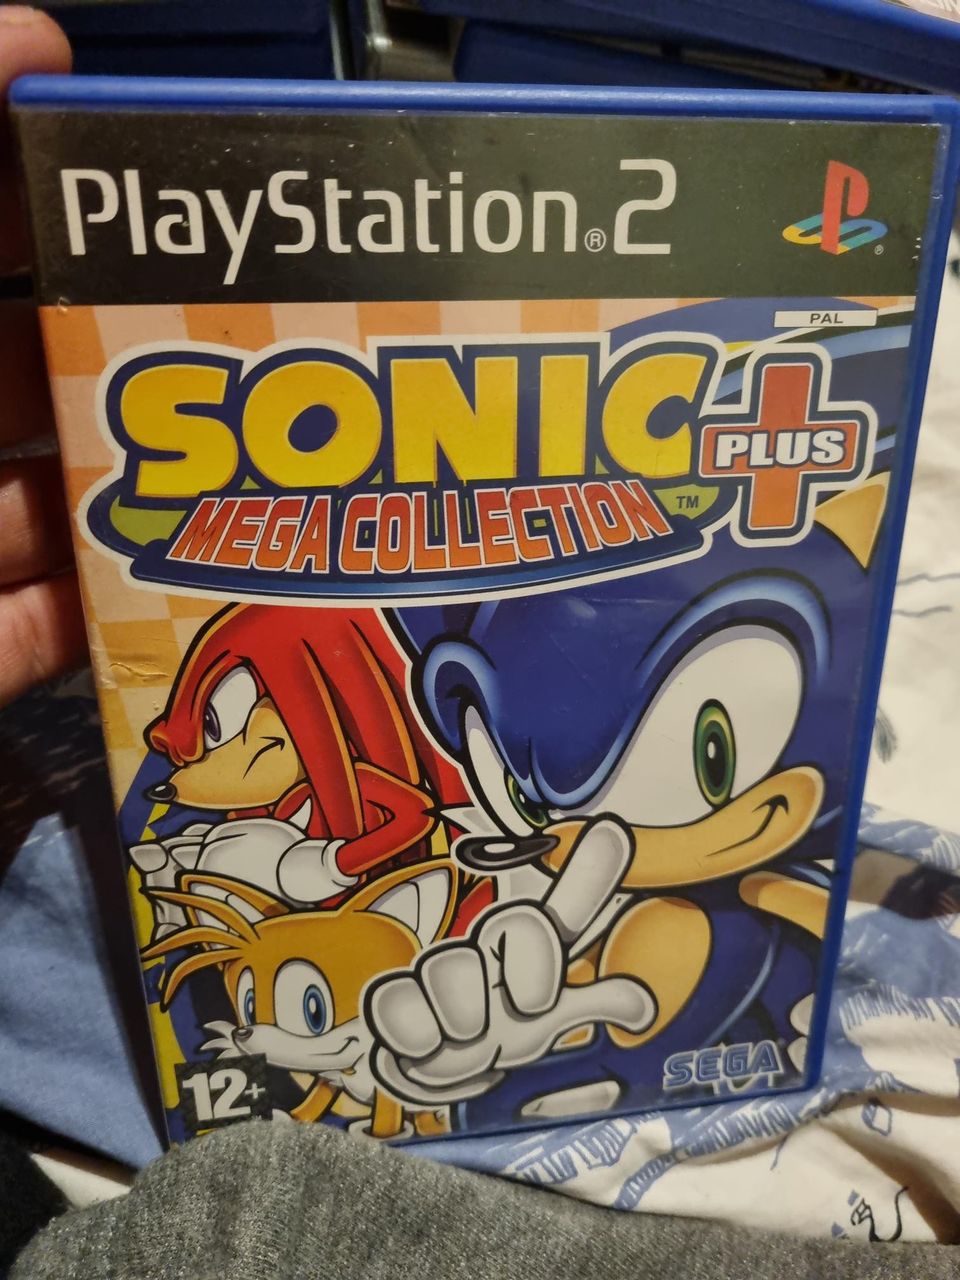 Sonic mega collection plus ps2